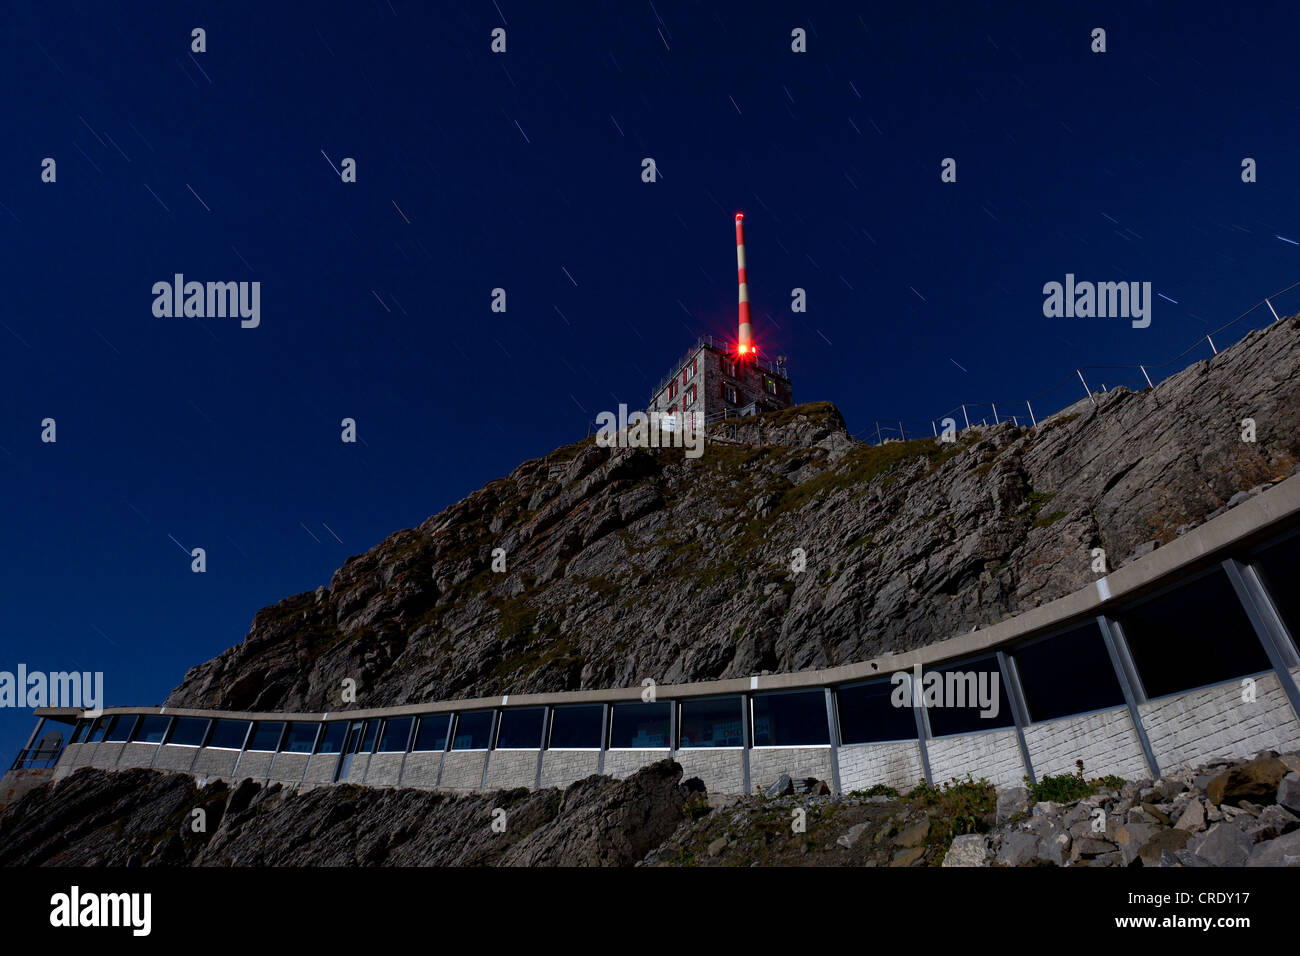 Transmission system on Mt Saentis in the light of the full moon, Alpstein range, Switzerland, Europe Stock Photo